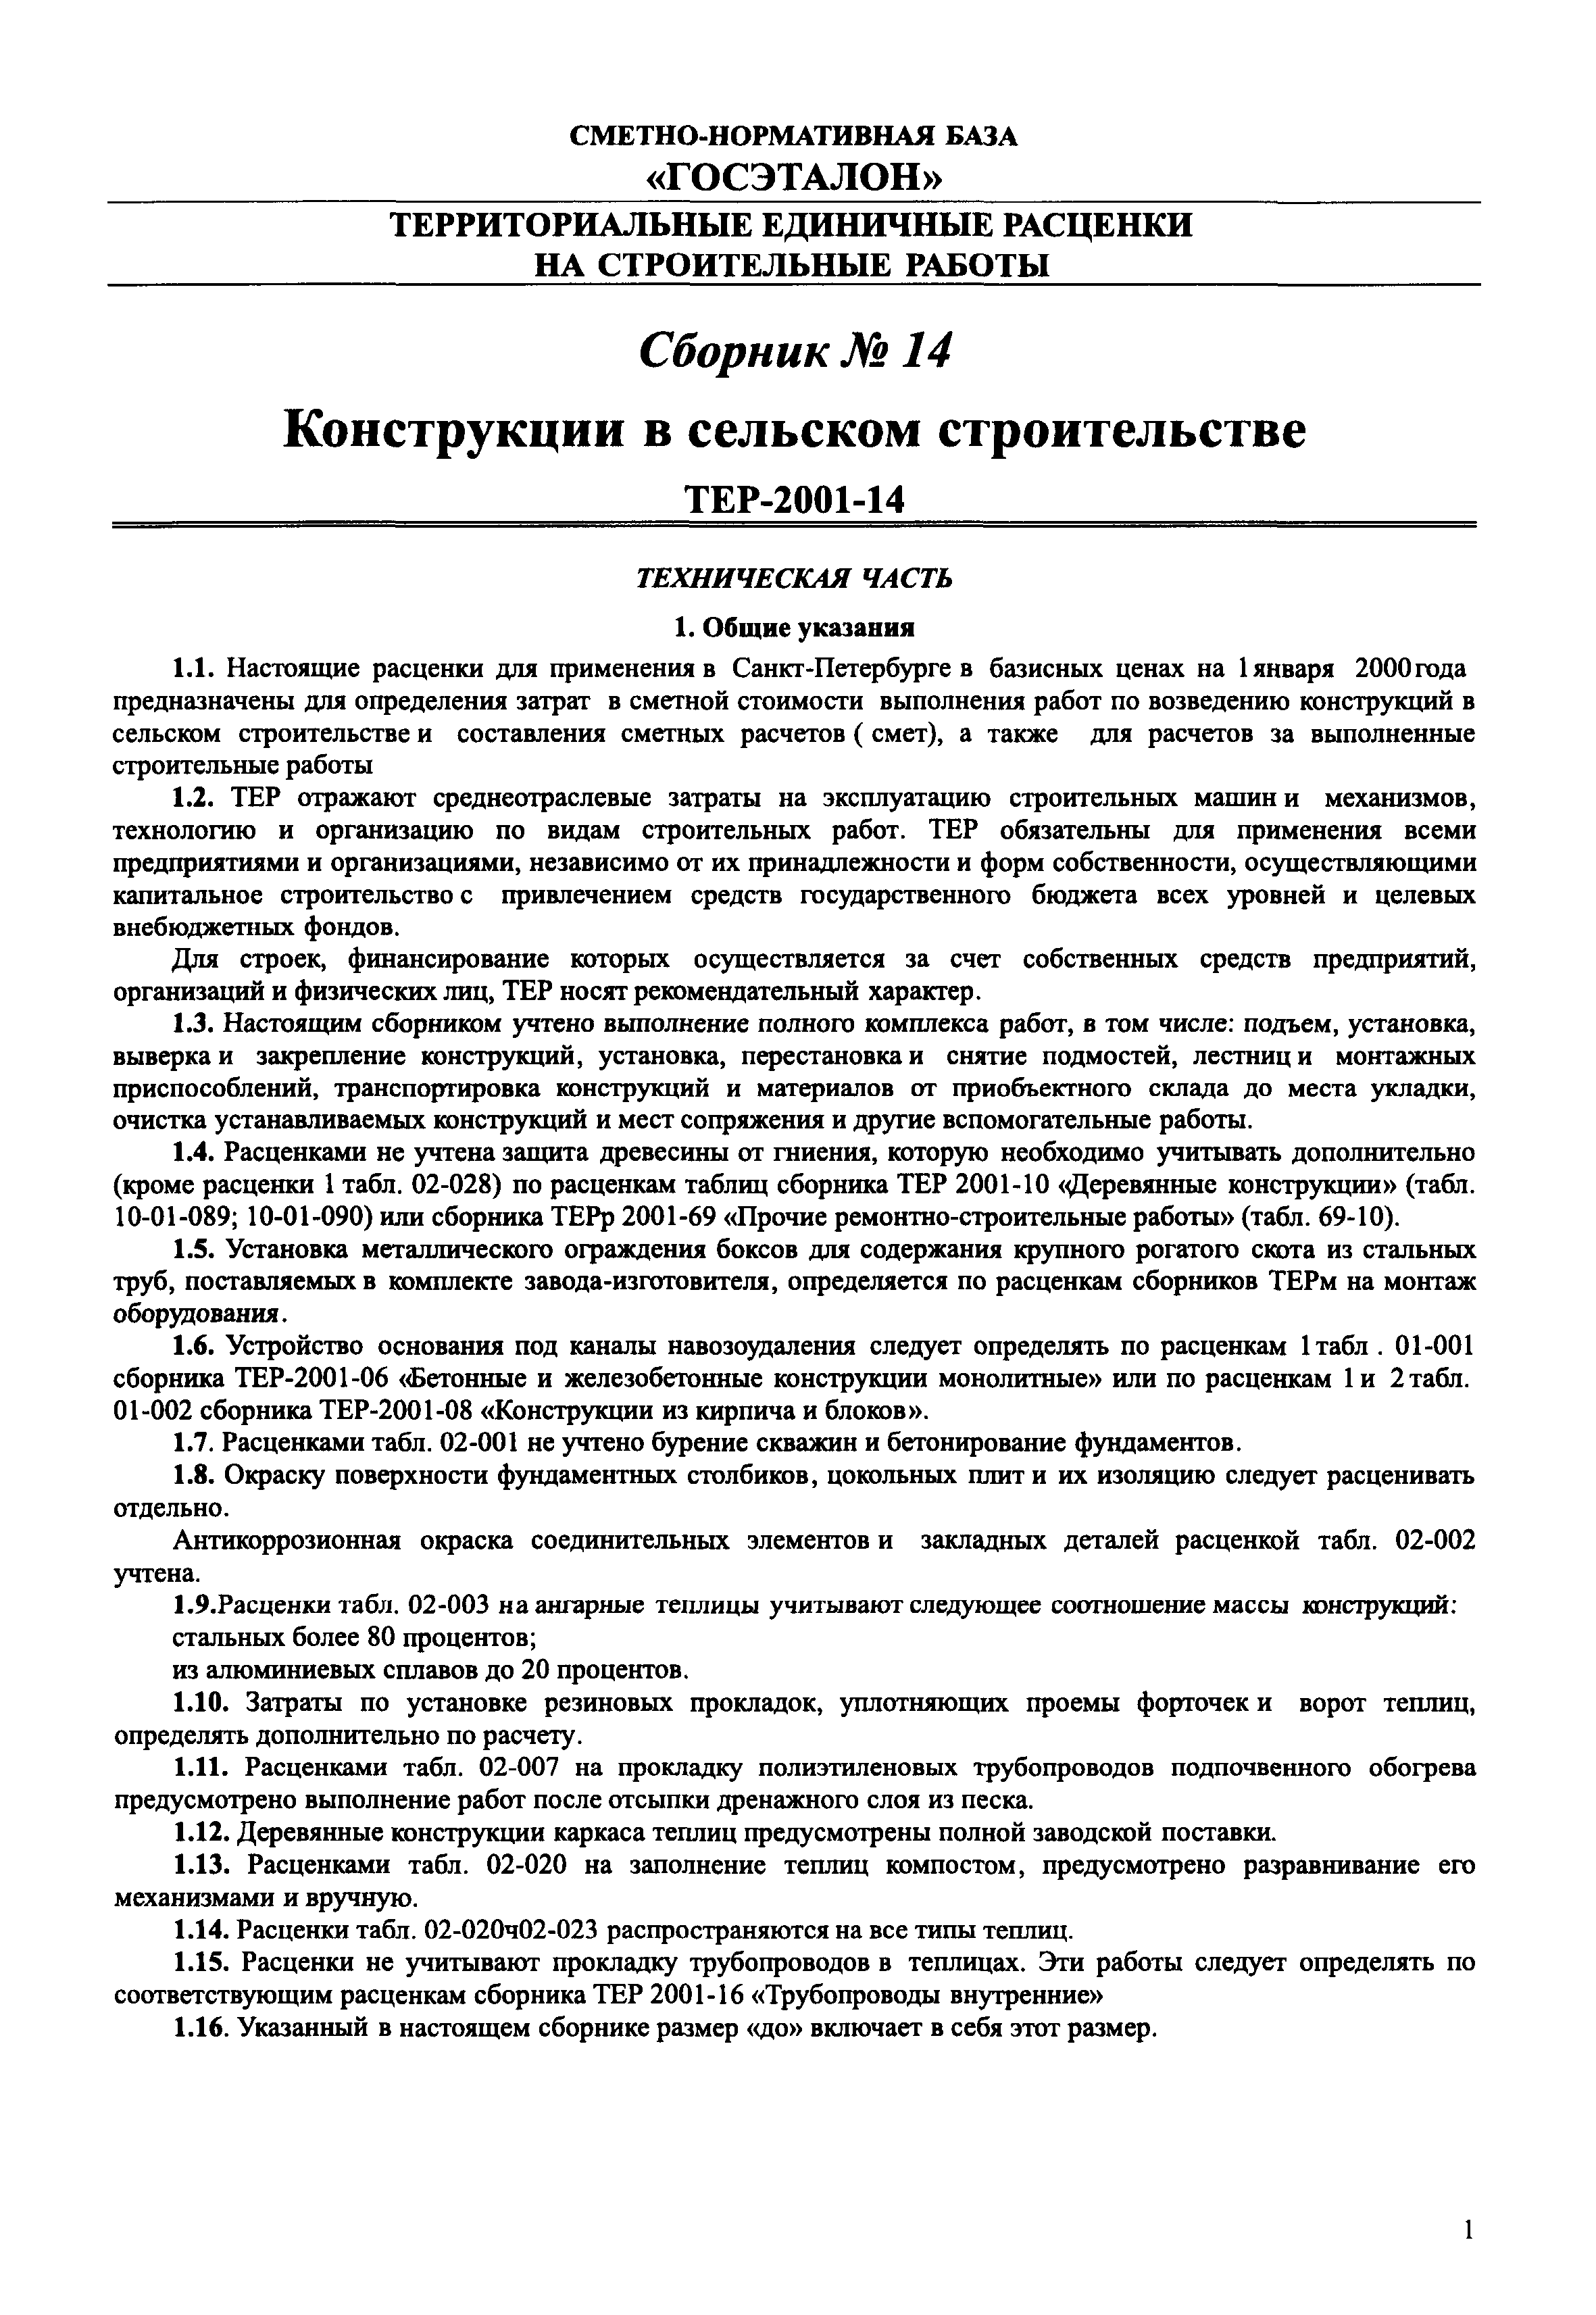 ТЕР 2001-14 СПб